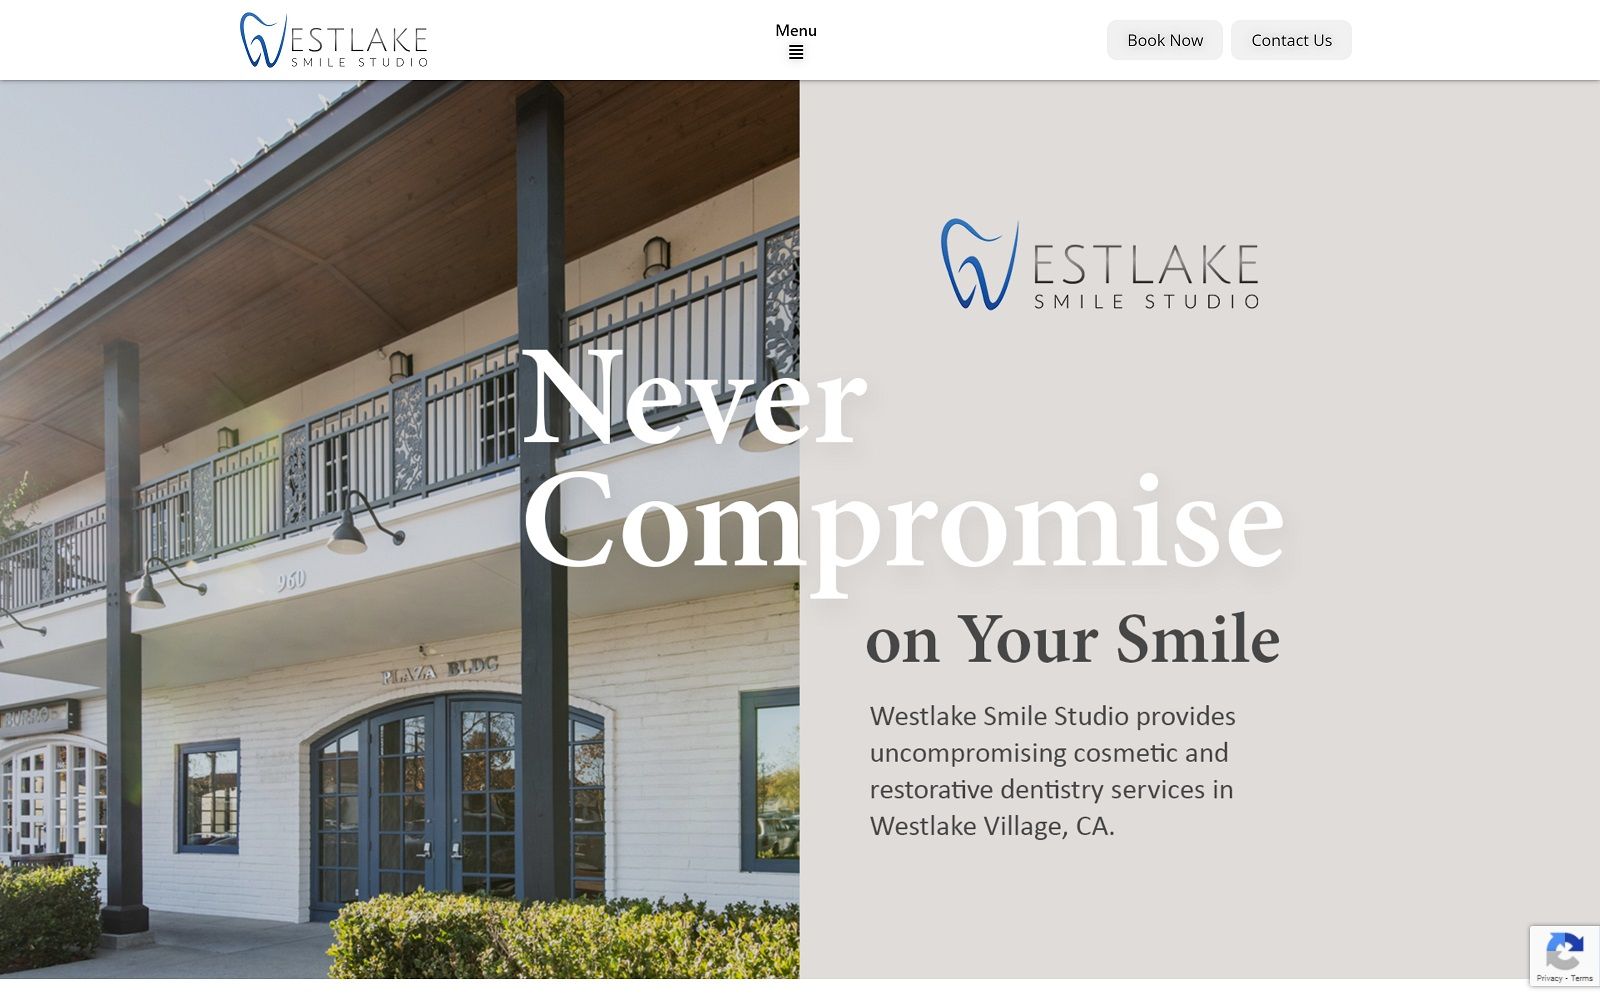 Westlake Smile Studio Website Screenshot From Url Westlakesmilestudio.com